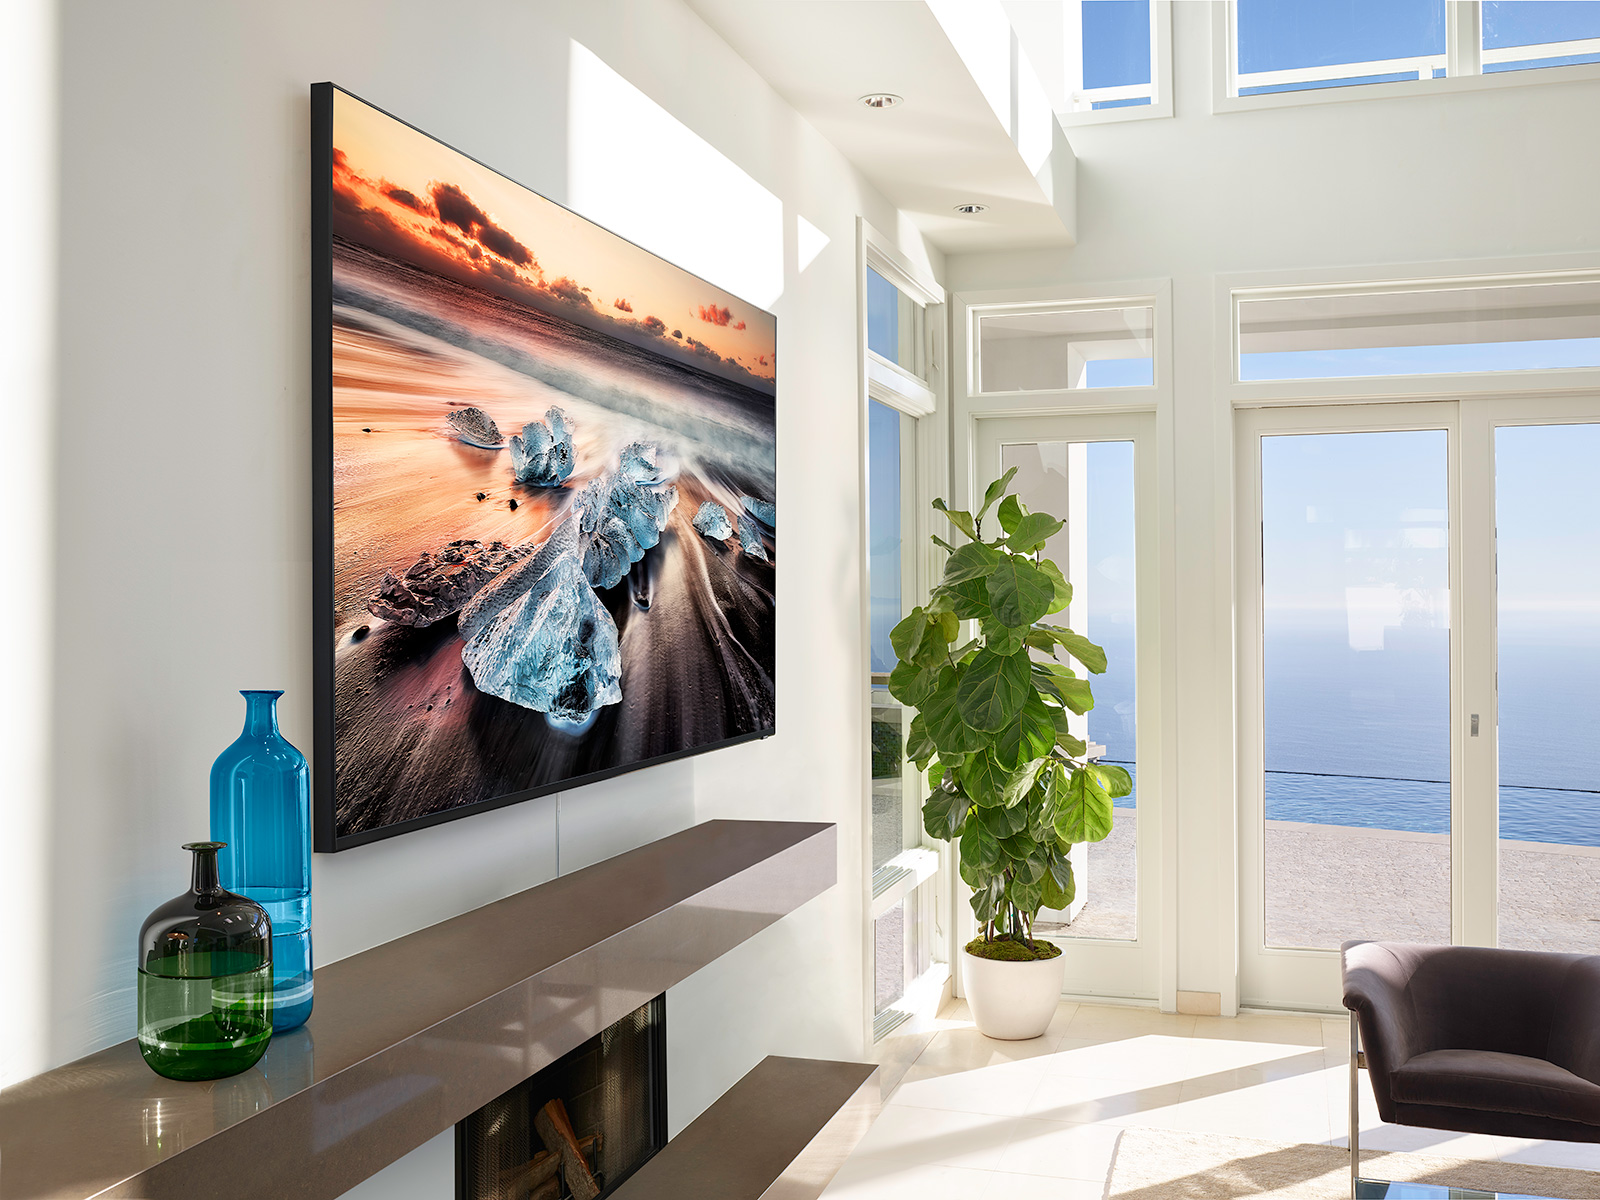 85" Class Q900 QLED Smart 8K UHD TV (2018) TVs ...